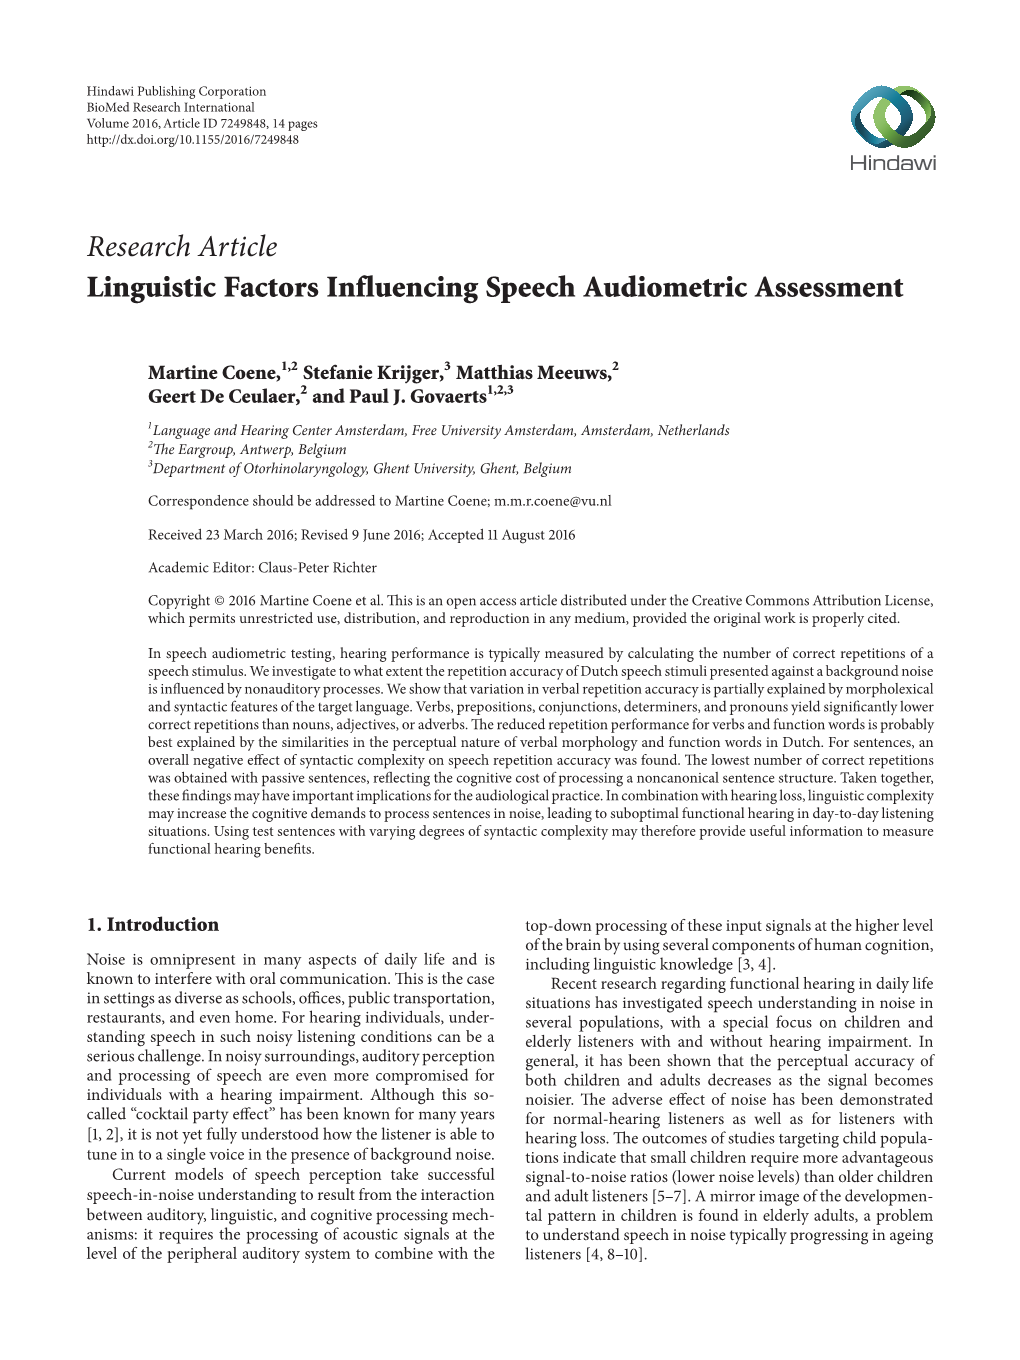 Research Article Linguistic Factors Influencing Speech Audiometric Assessment